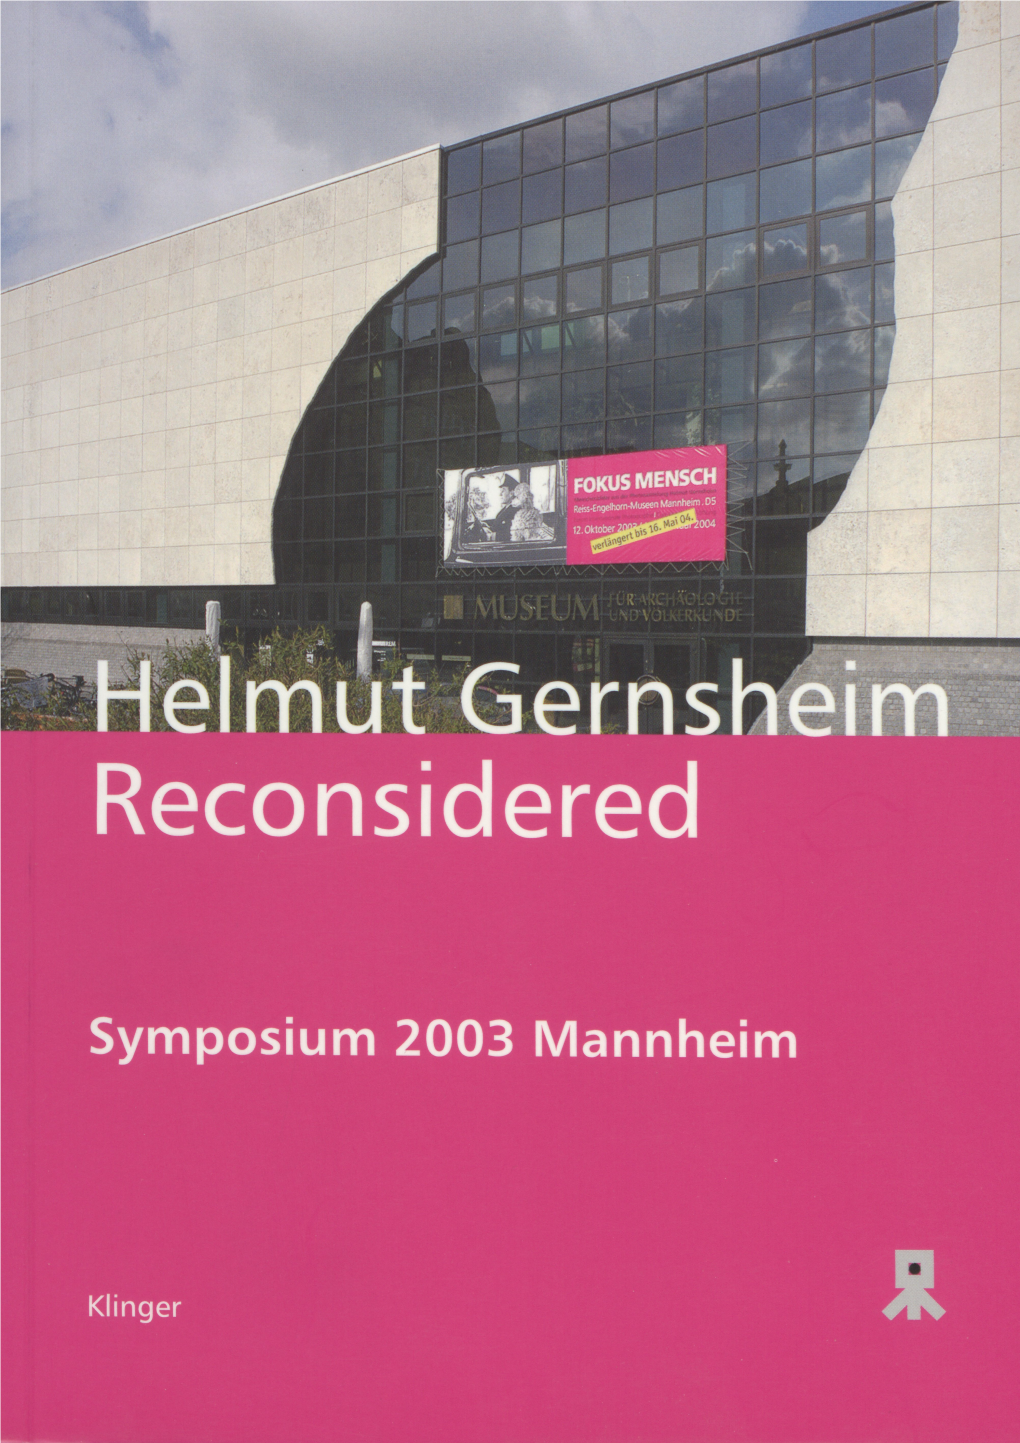 Symposium Mannheim 2003 the Delegates at the Reiss-Engelhorn Museen, Anna Reiss-Saal, Mannheim